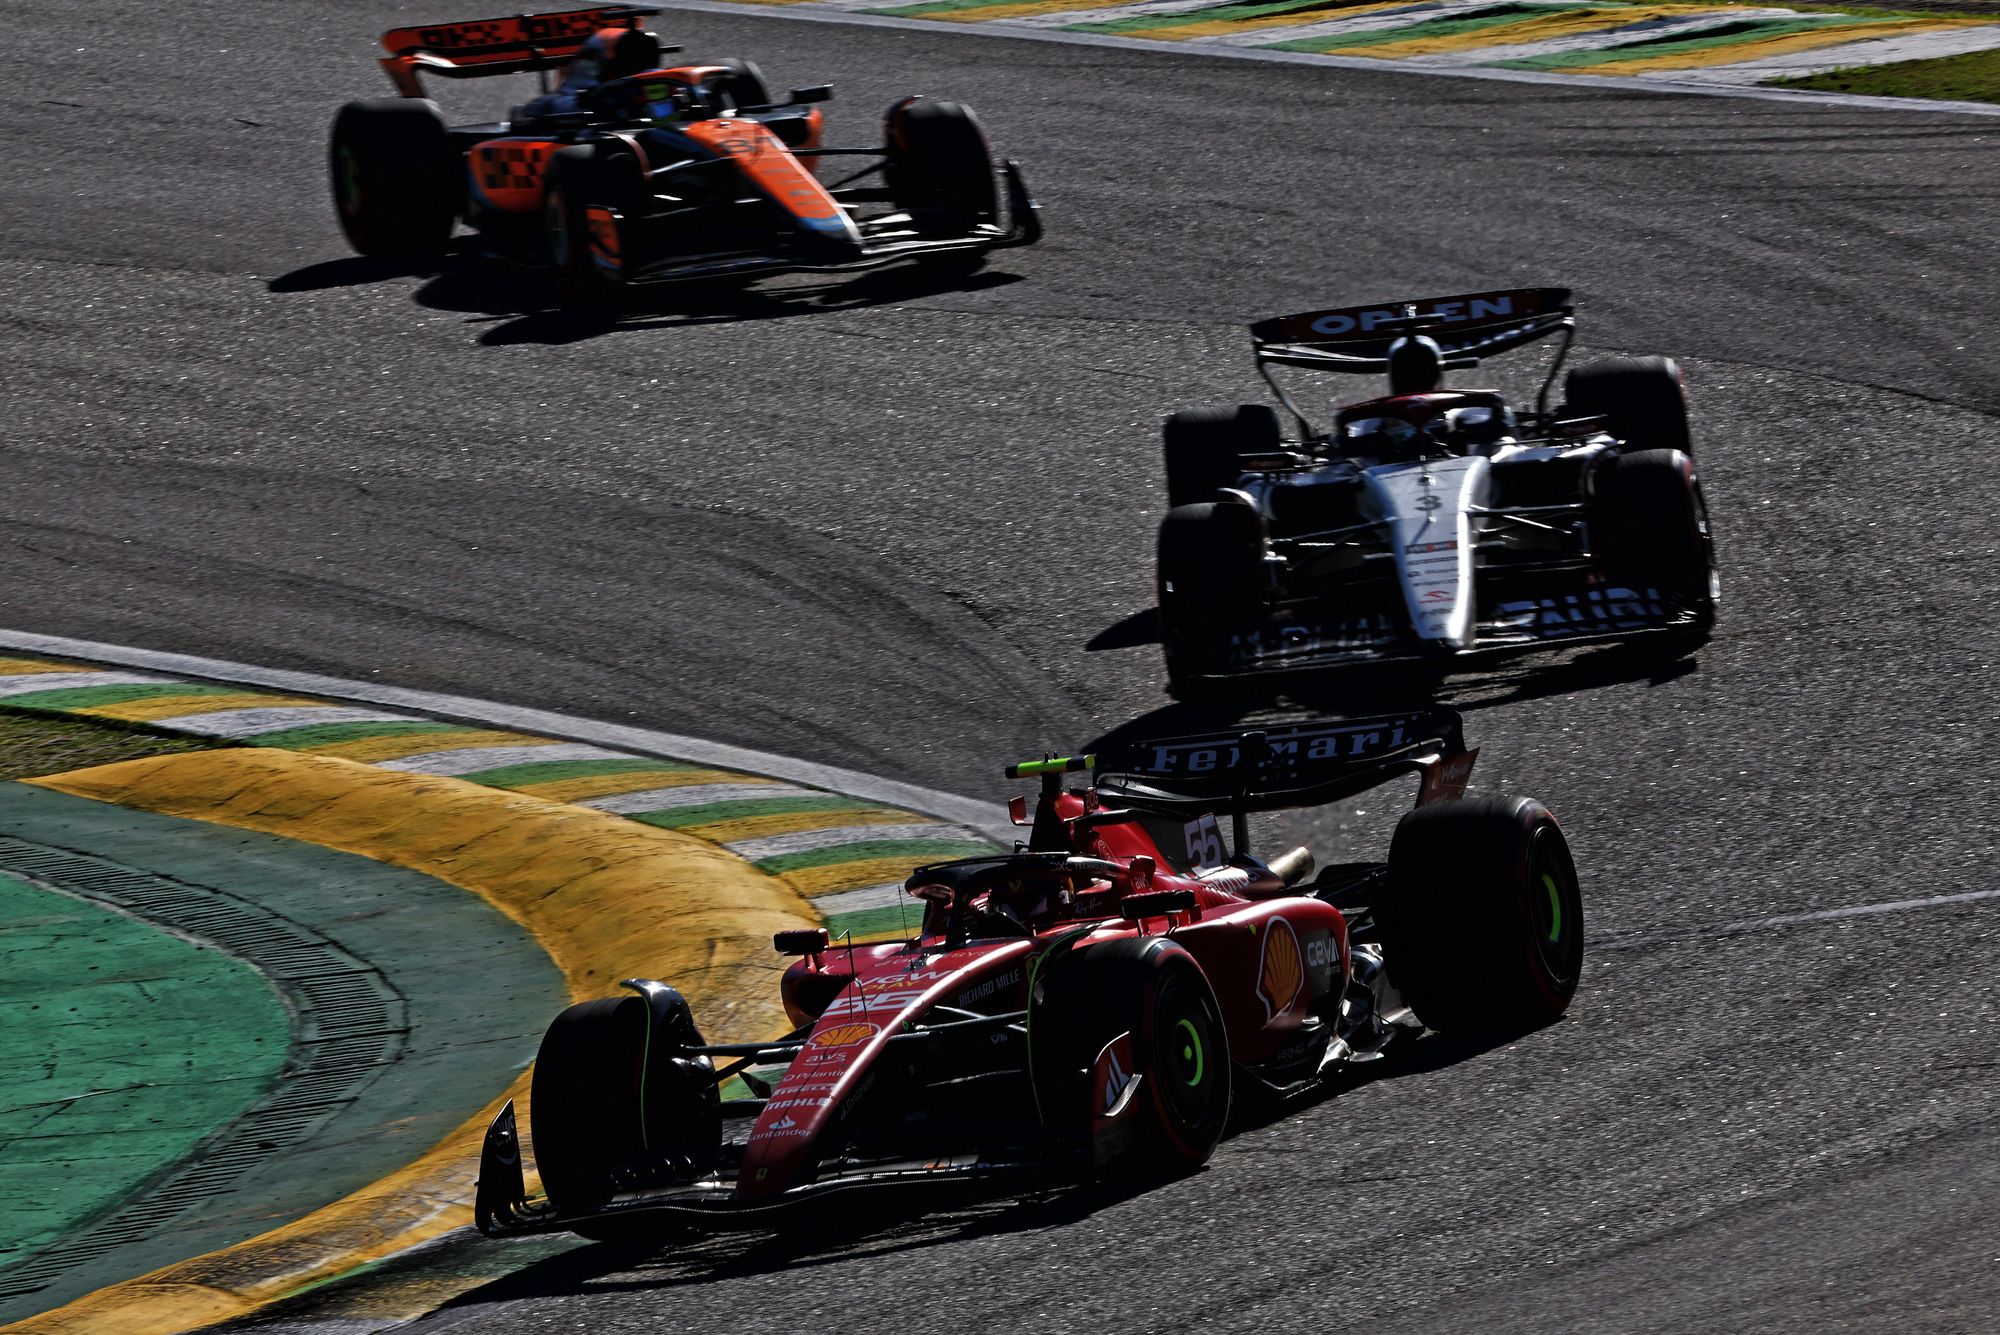 ‘F****d’ by DRS - but Ricciardo’s racecraft hurt him too - The Race